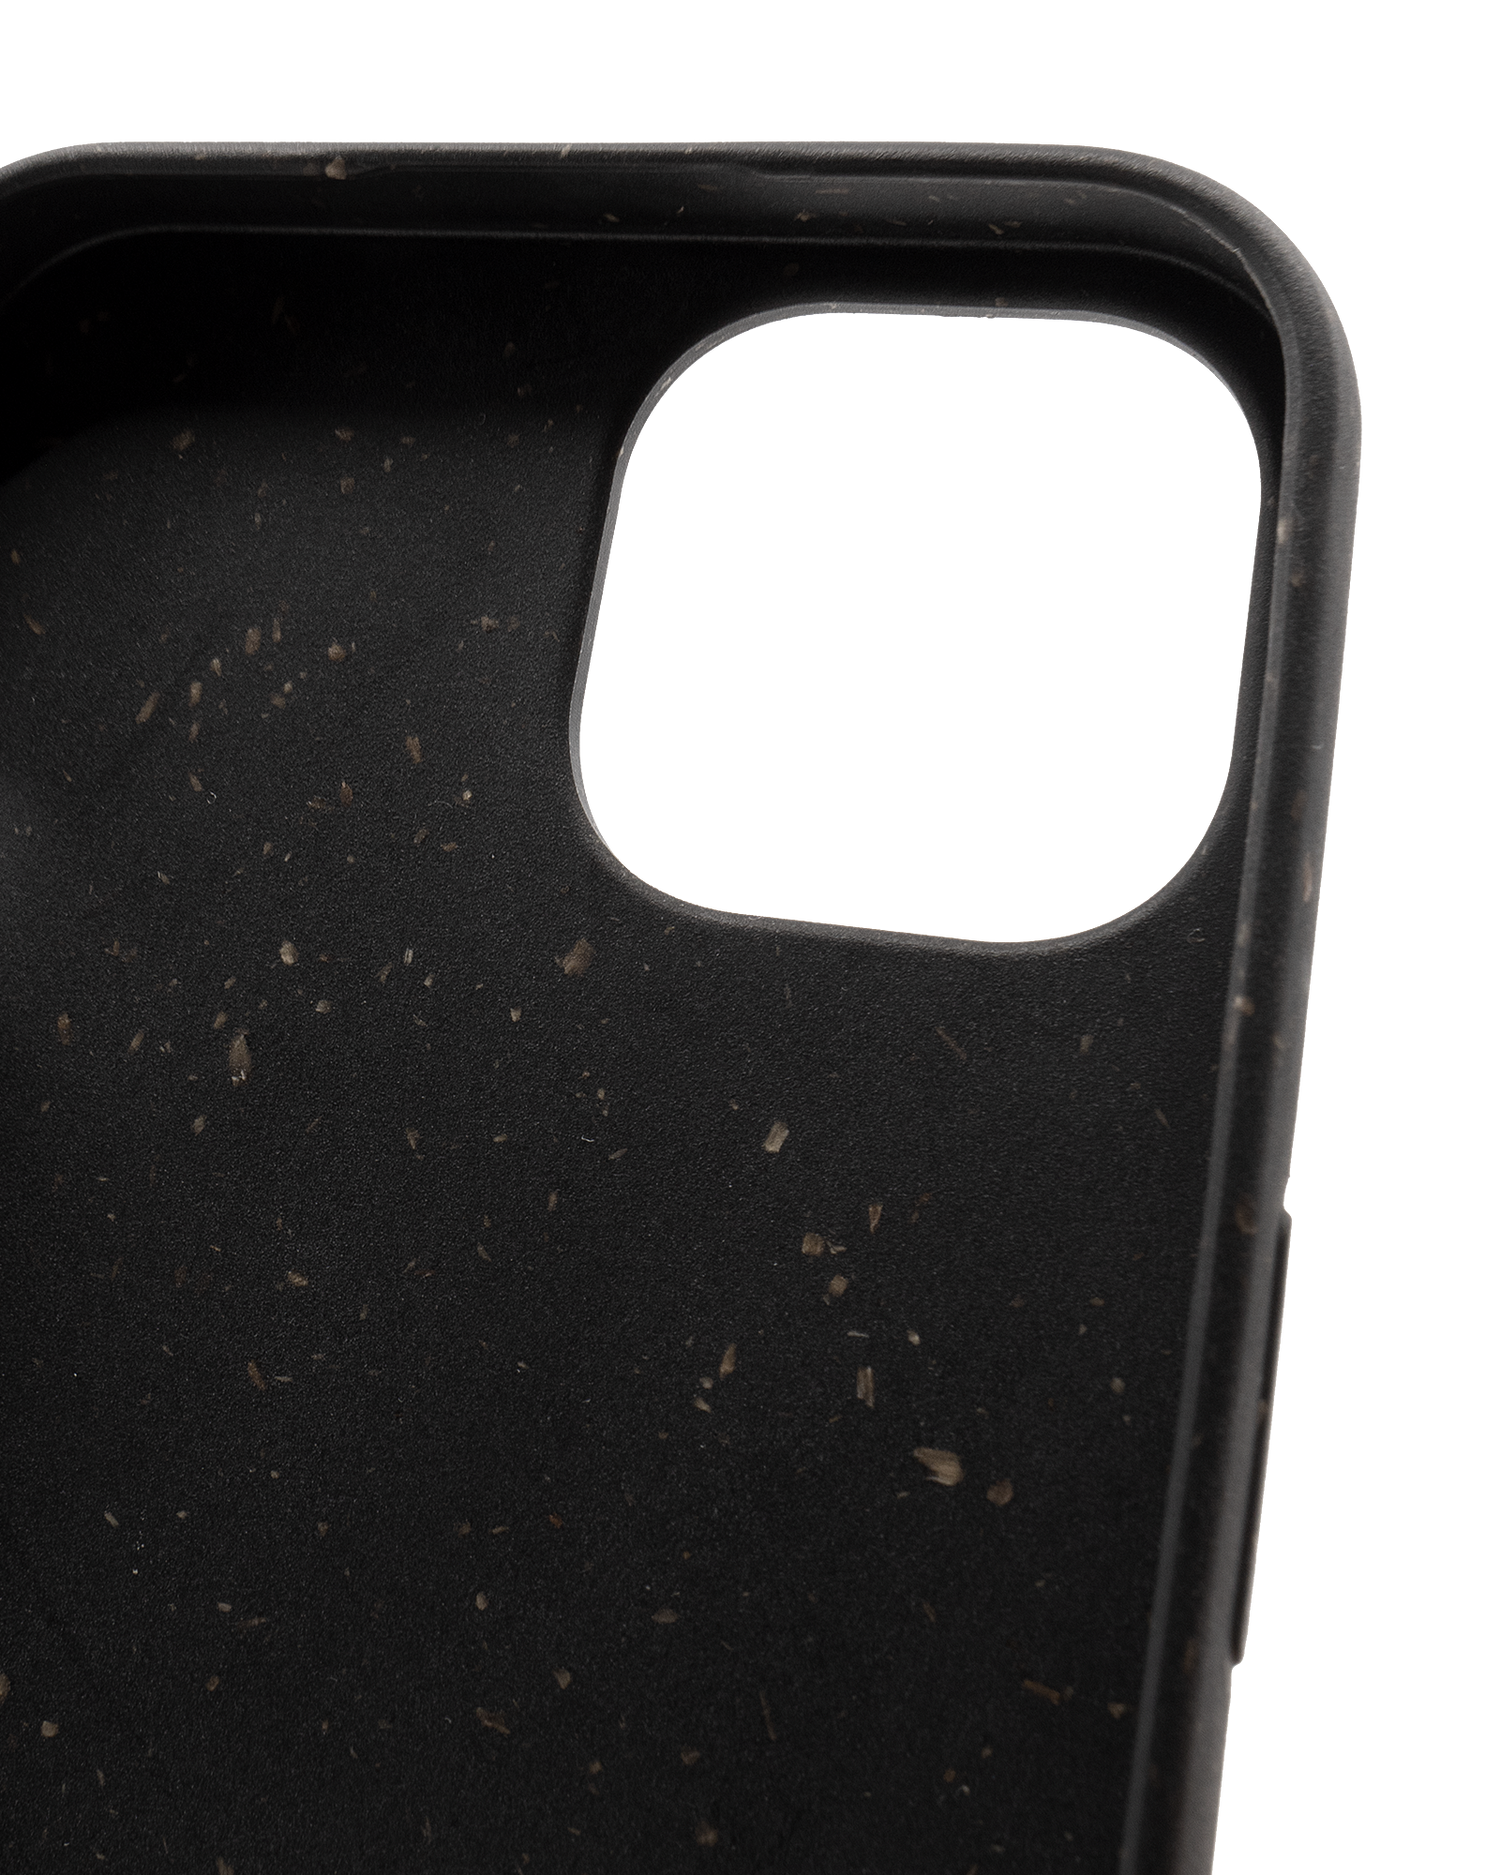 Black Eco-Friendly Phone Case for Apple iPhone 13: Details inside